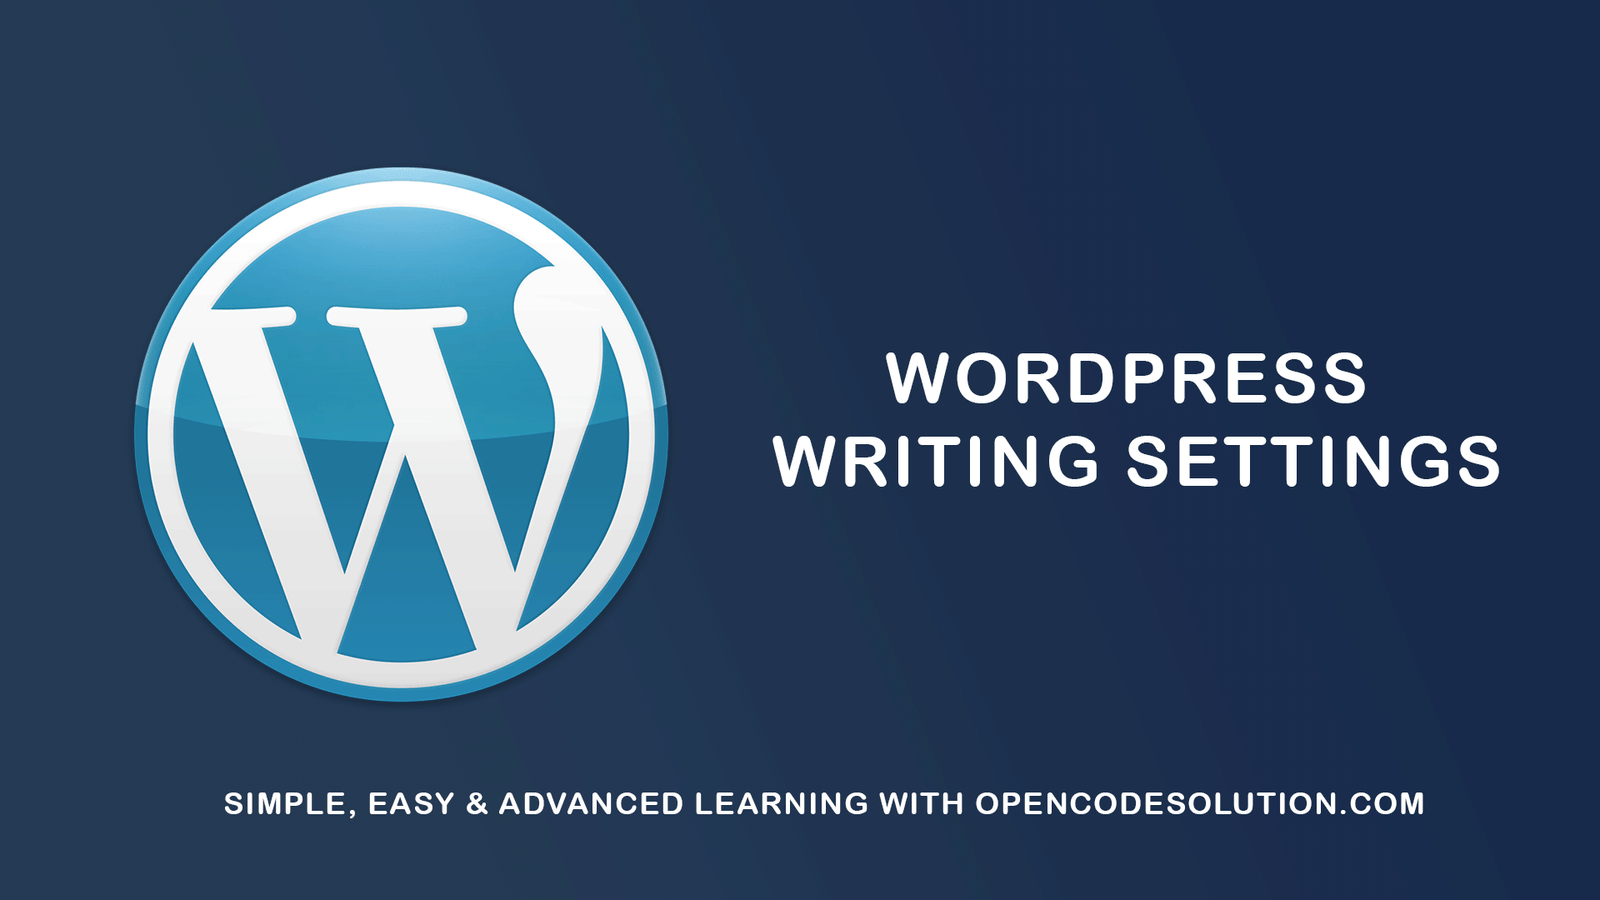 WordPress Writing Settings #6